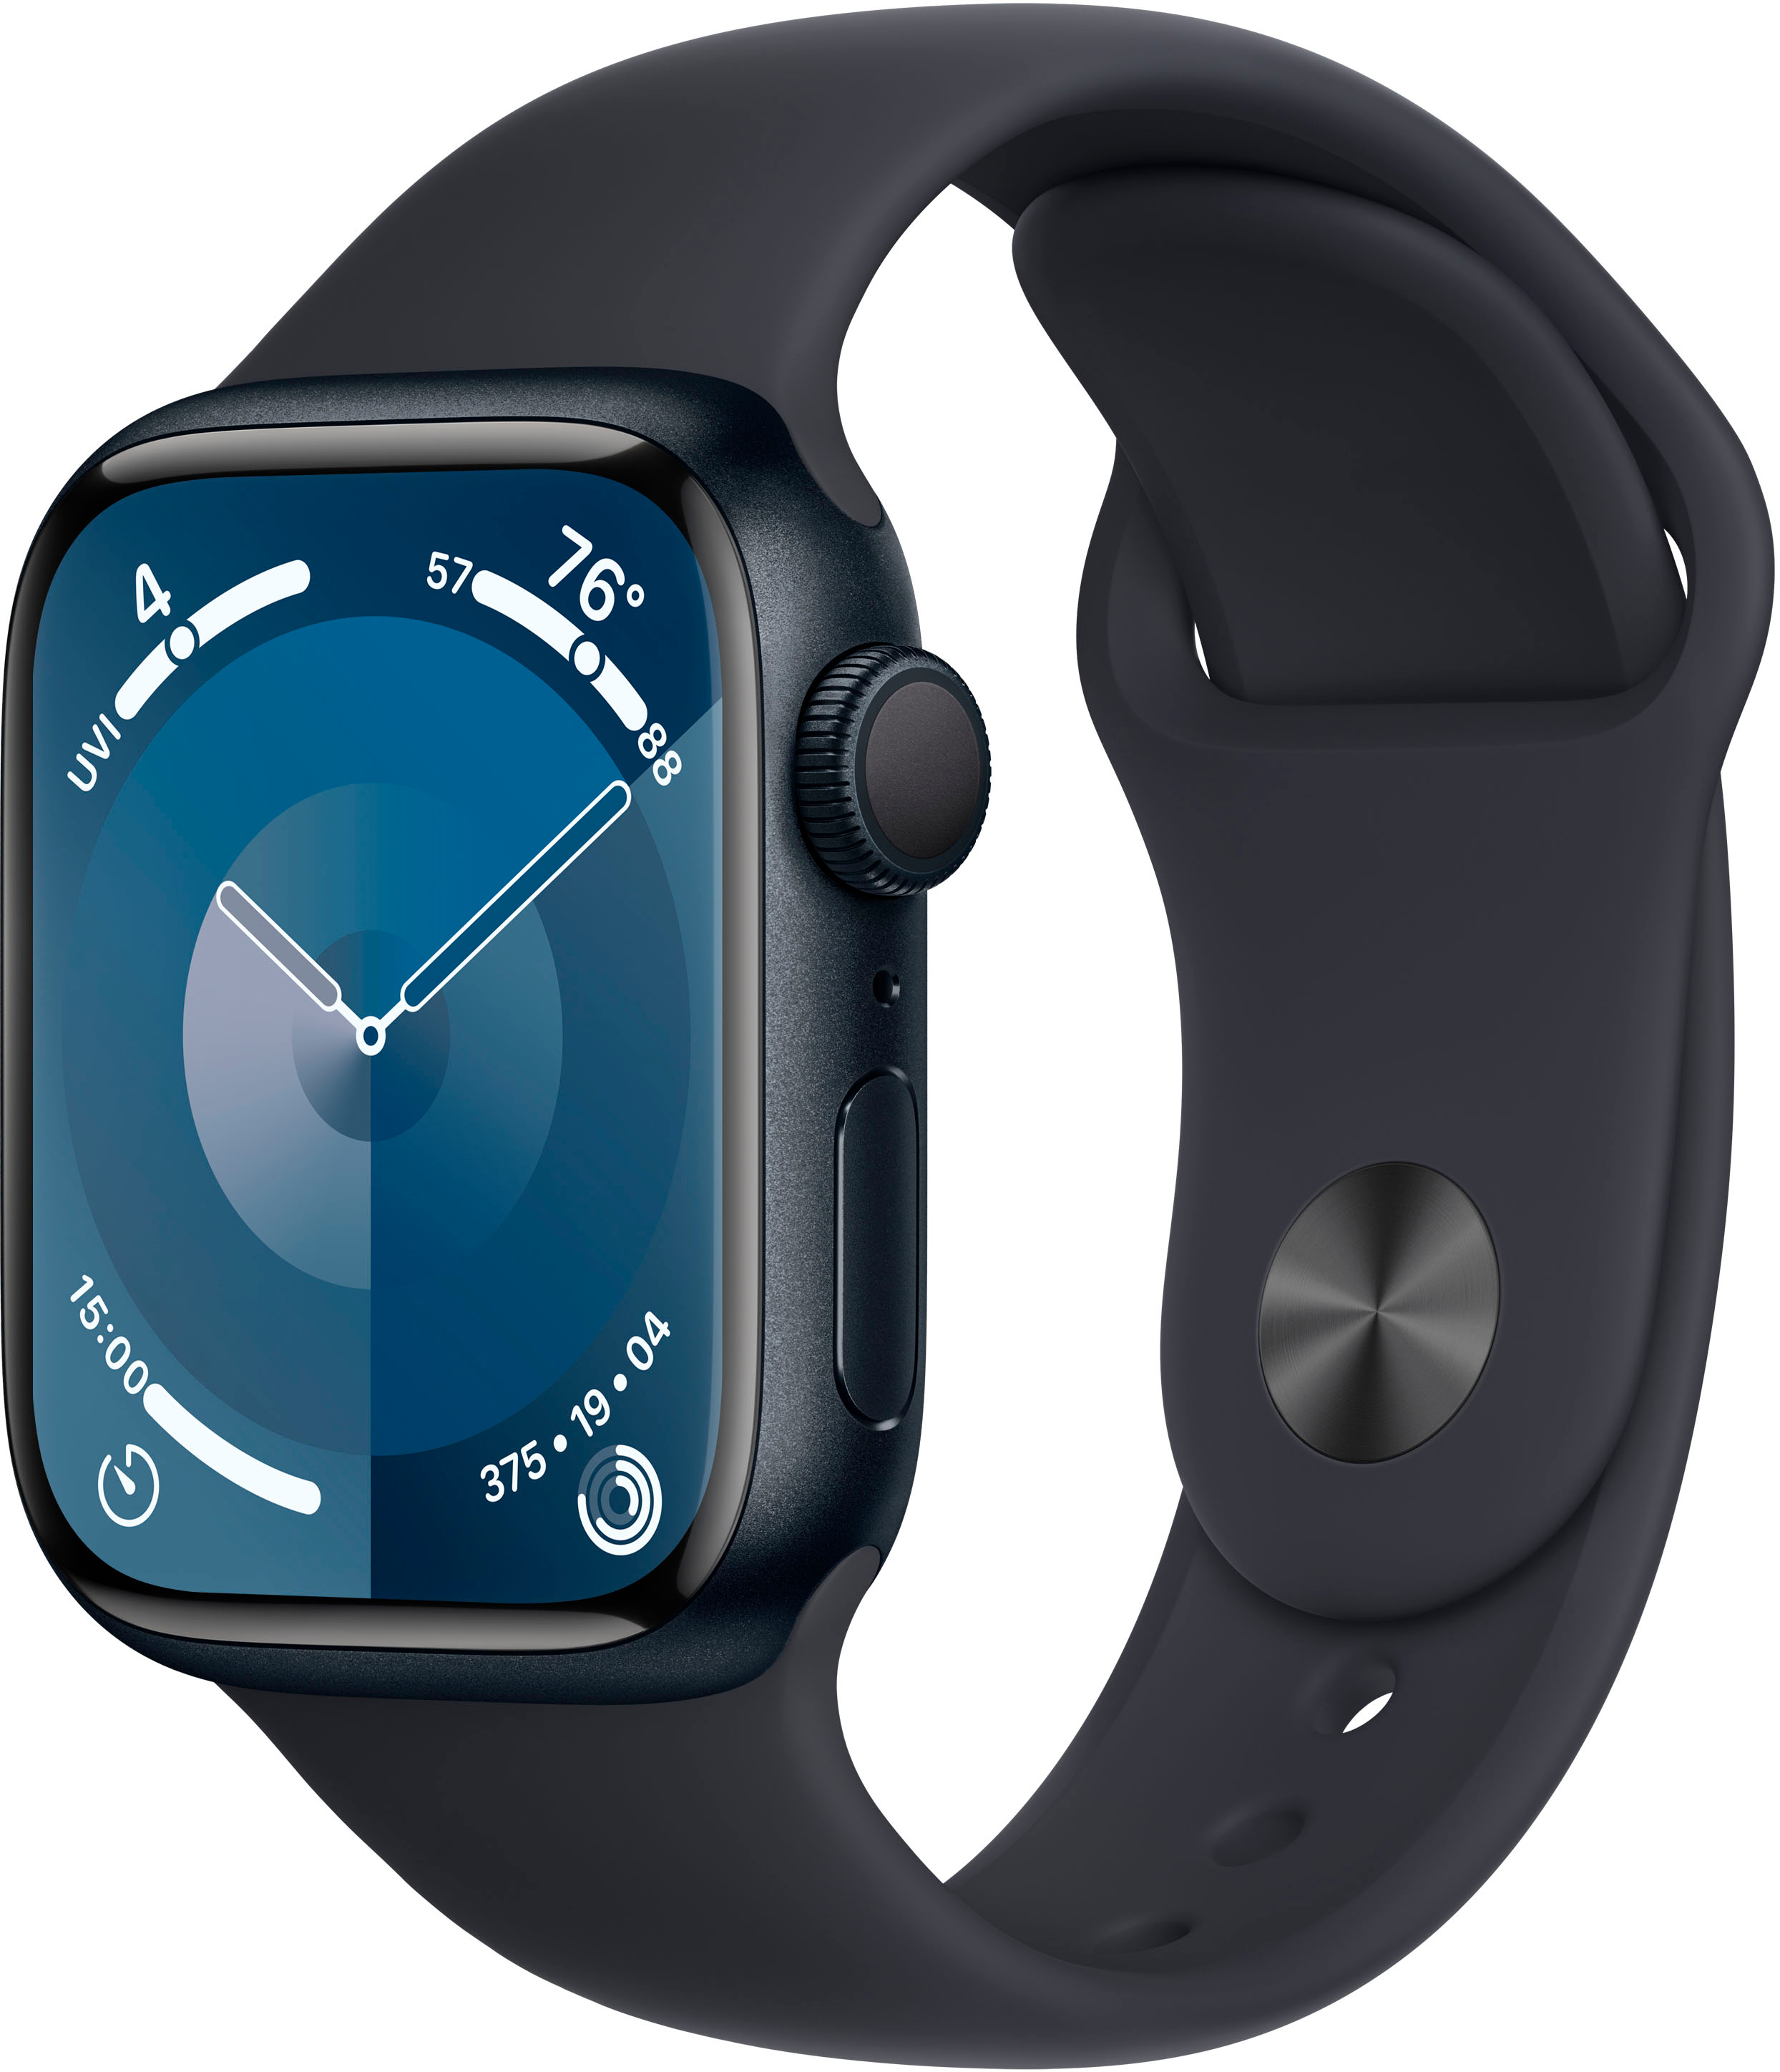 Apple Watch Series 9 GPS 41mm Midnight Aluminum Case with Midnight